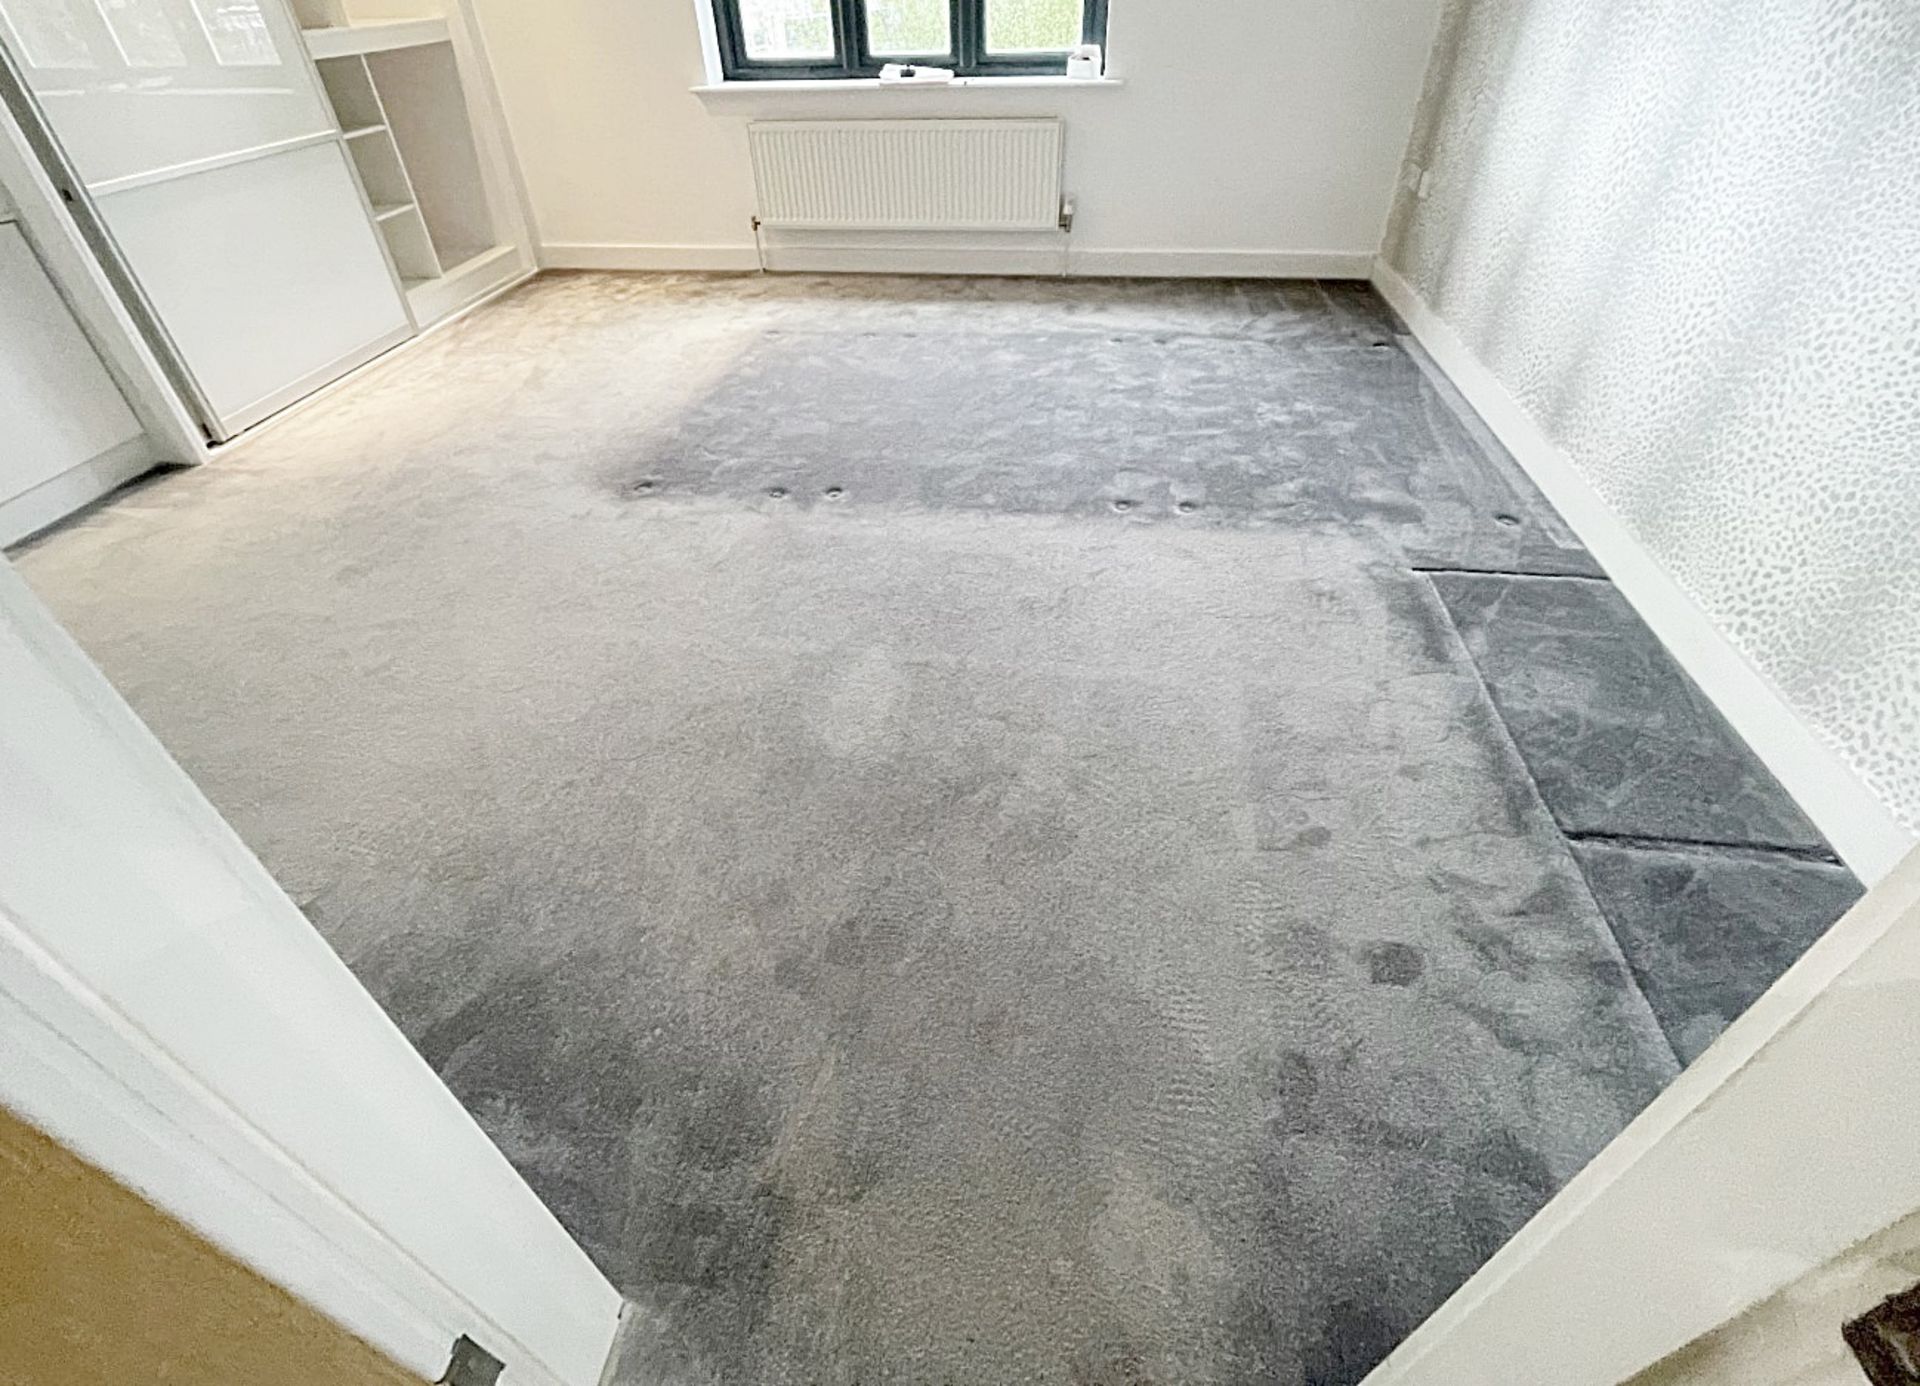 1 x Premium Fitted Bedroom Carpet In Grey (3.9 x 4m) - Ref: REAR-BD/1stFLR - CL742 - Image 6 of 7